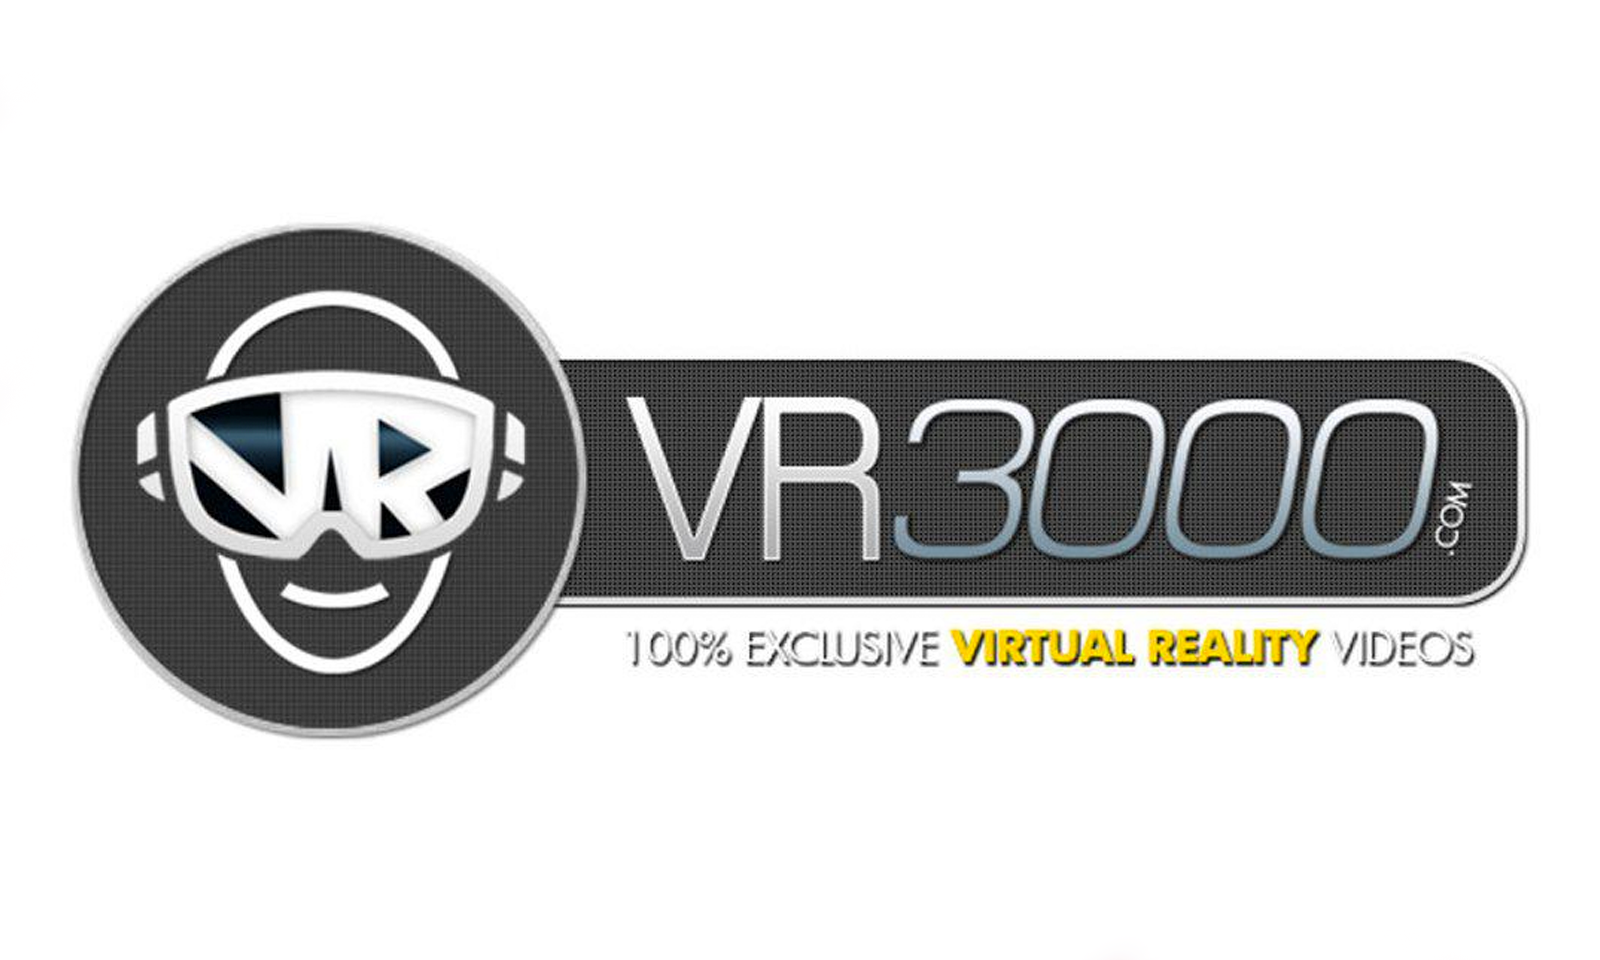 VR3000 Upgrades Interface, Design To Improve Site